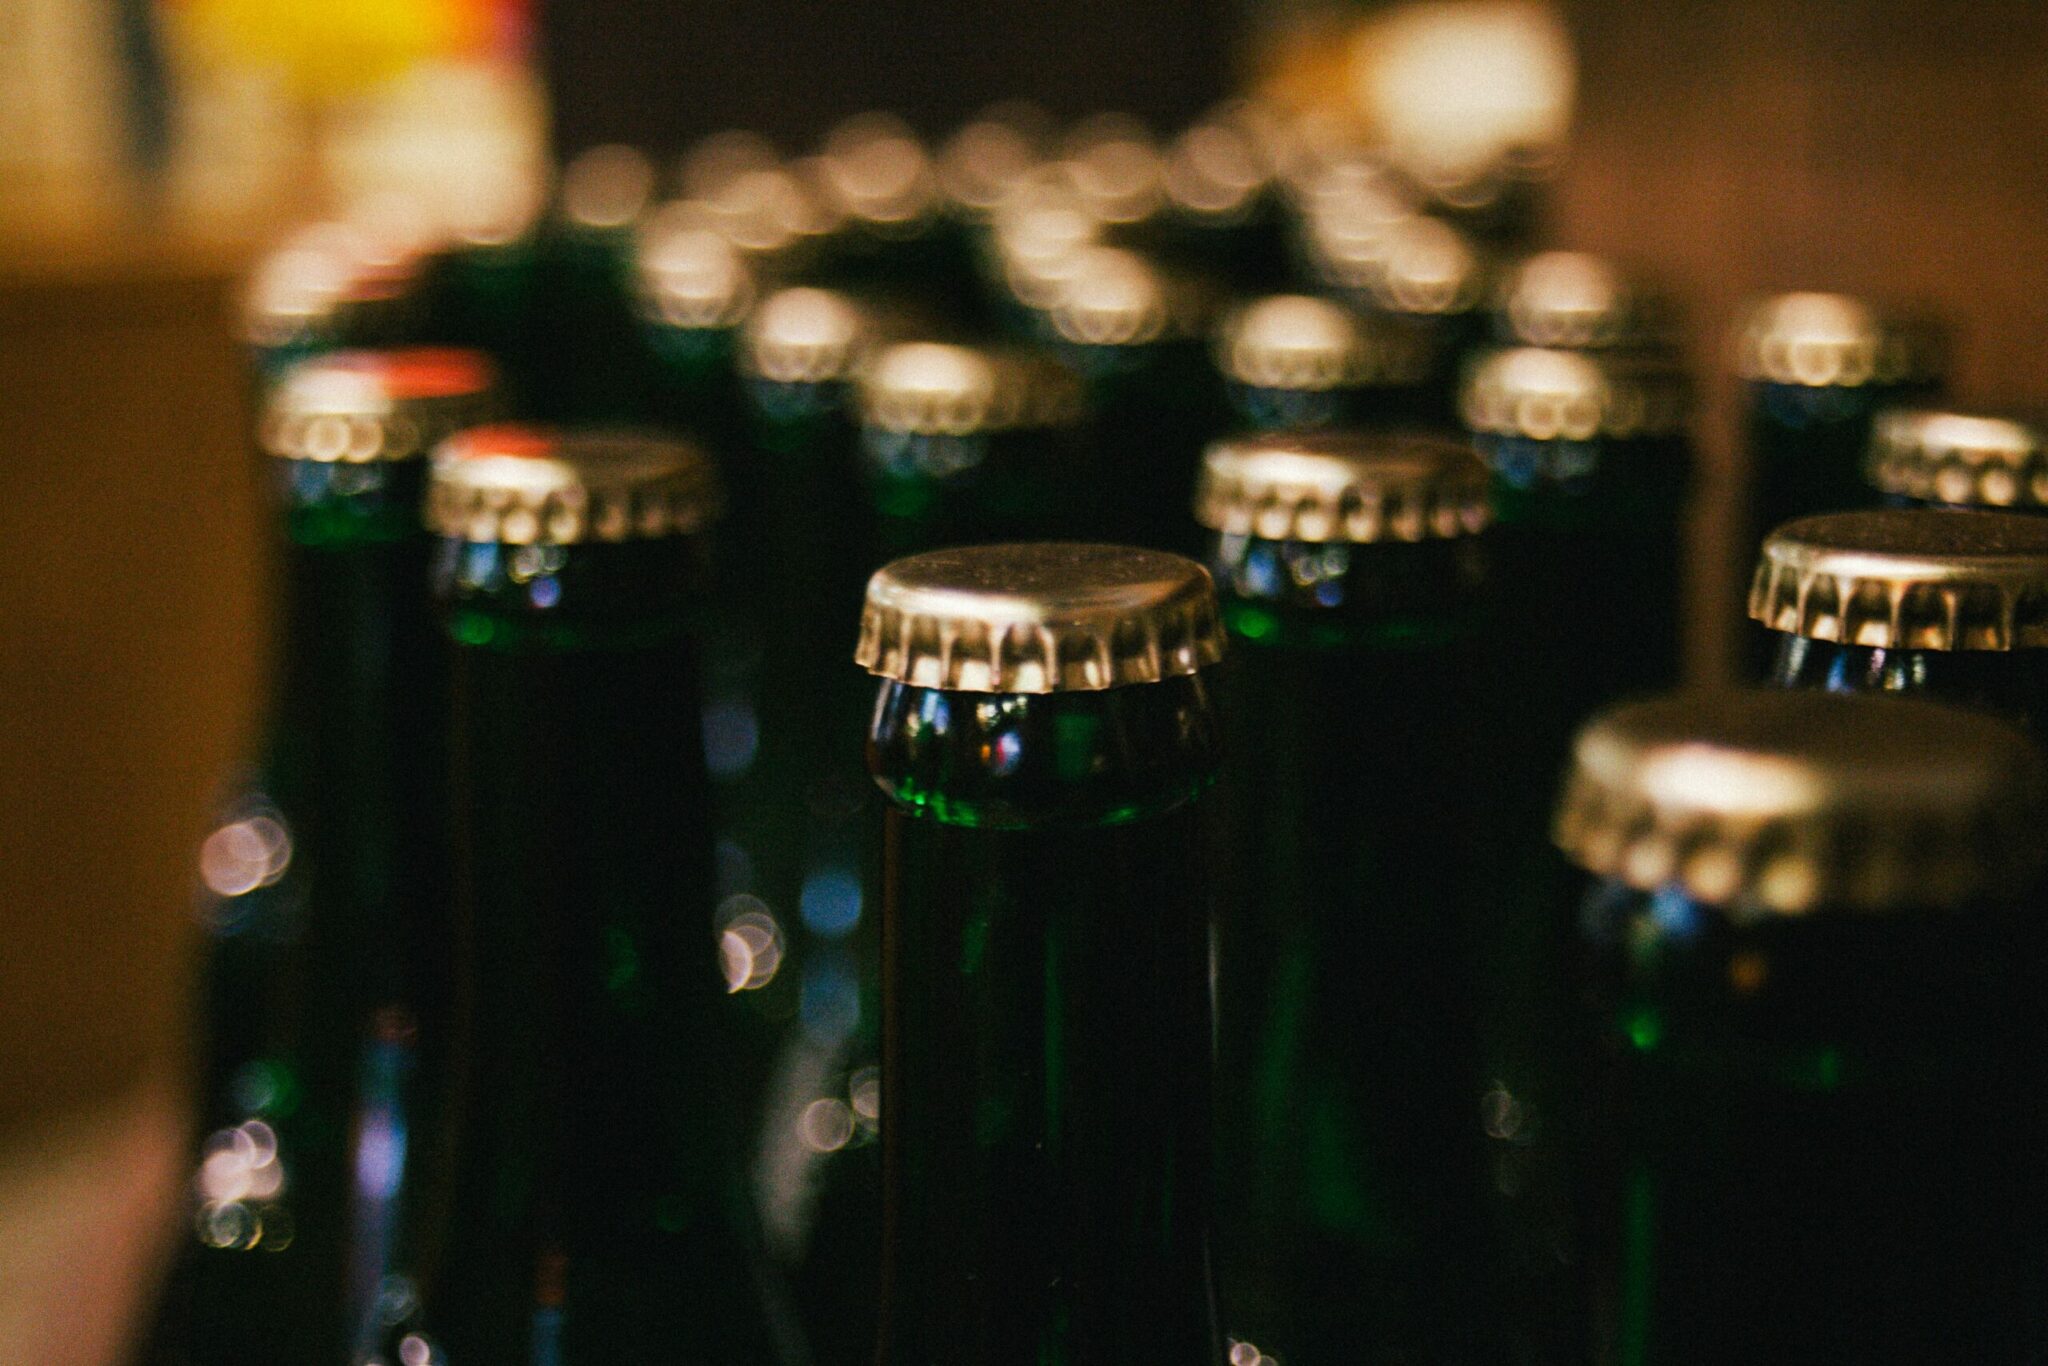 an image of bottles